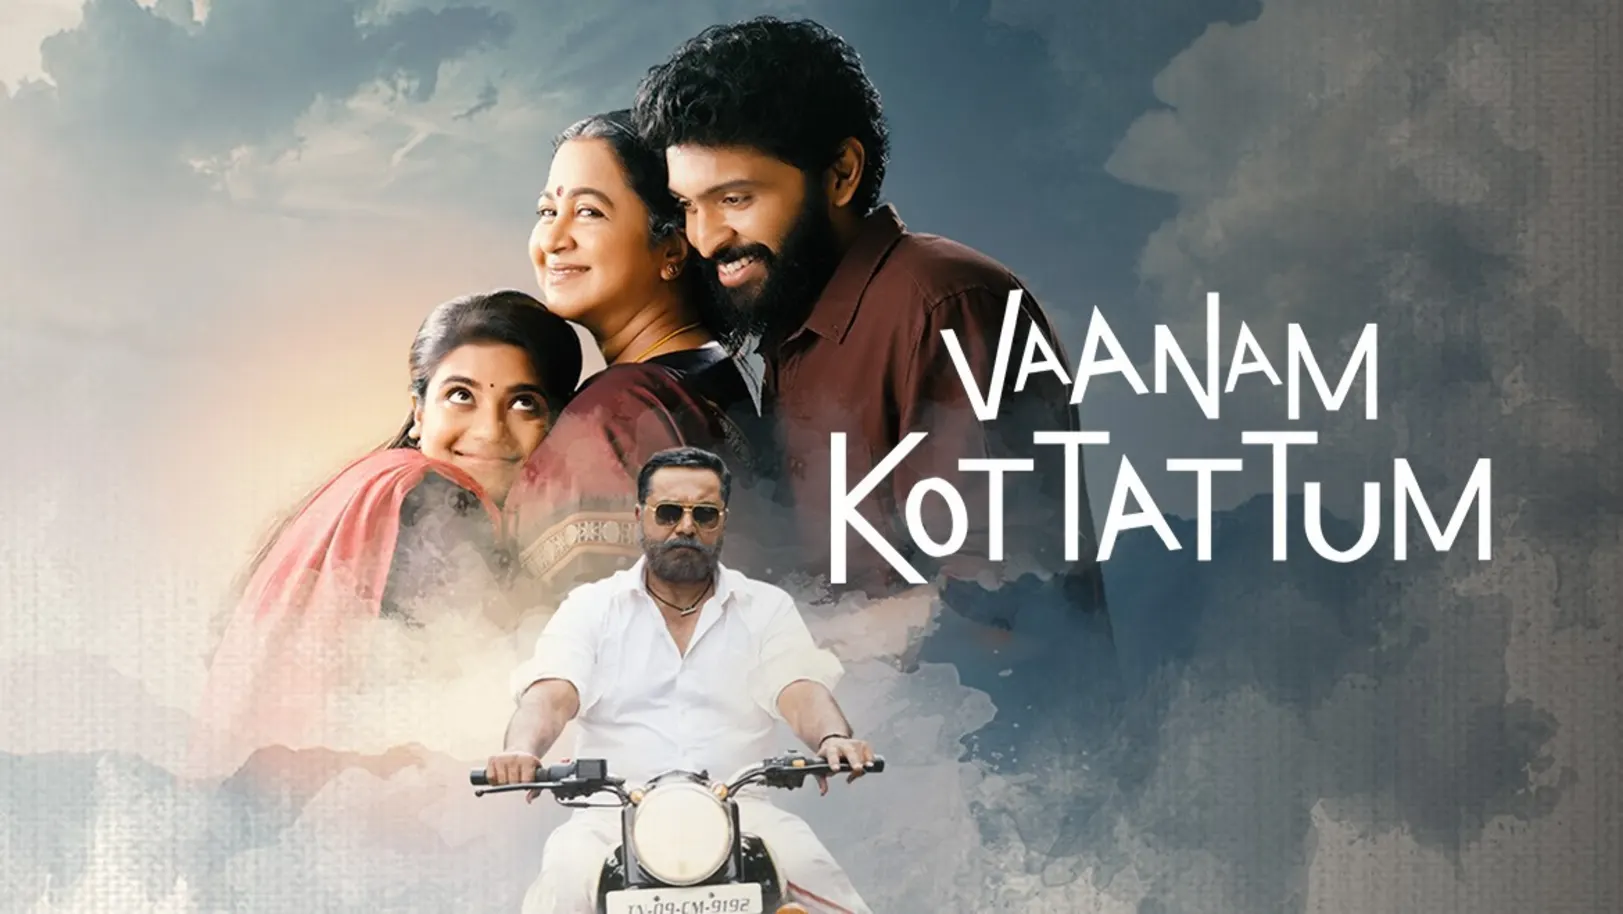 Vaanam Kottattum Movie